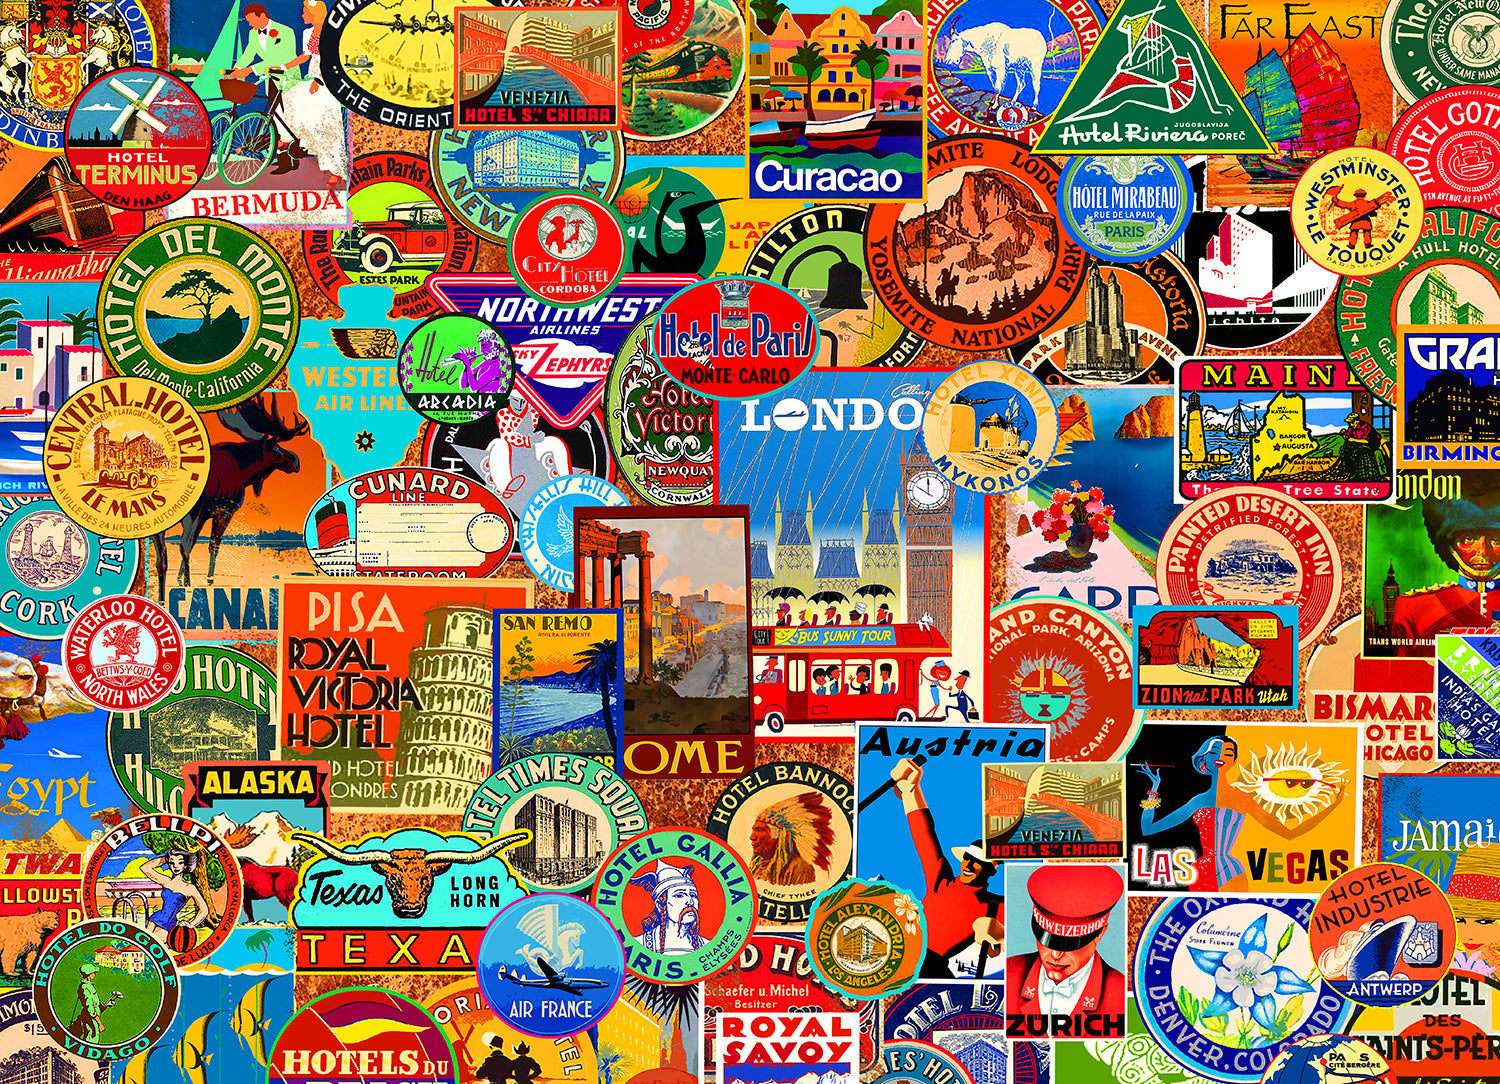 World of Travel 1000 Piece - Jigsaw Puzzle